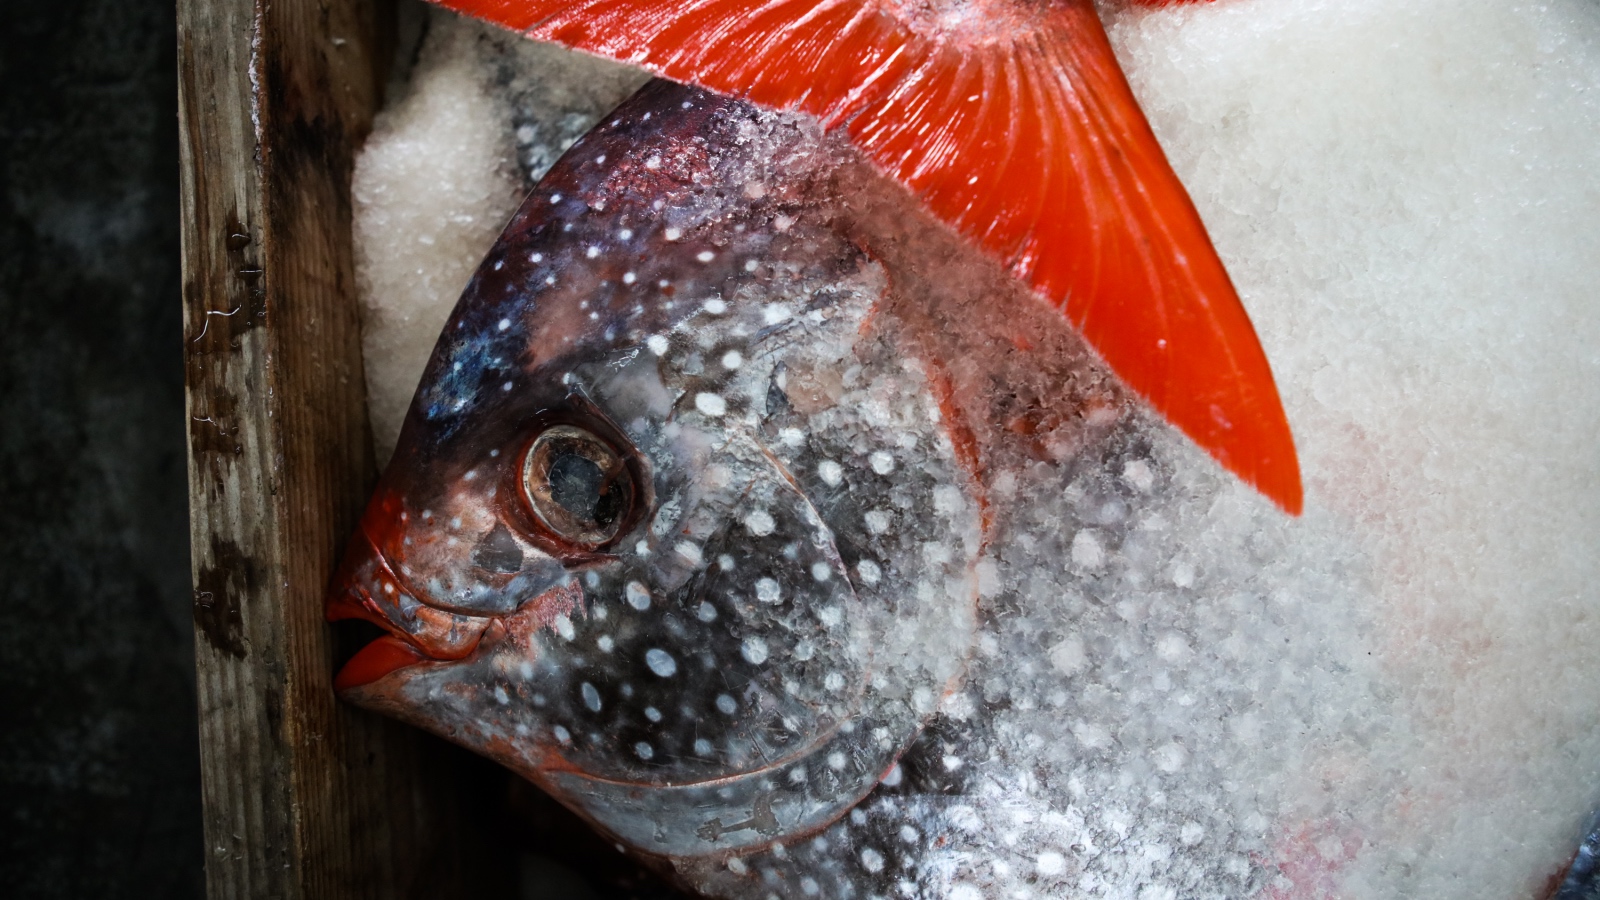 Opah moonfish close up pending world record